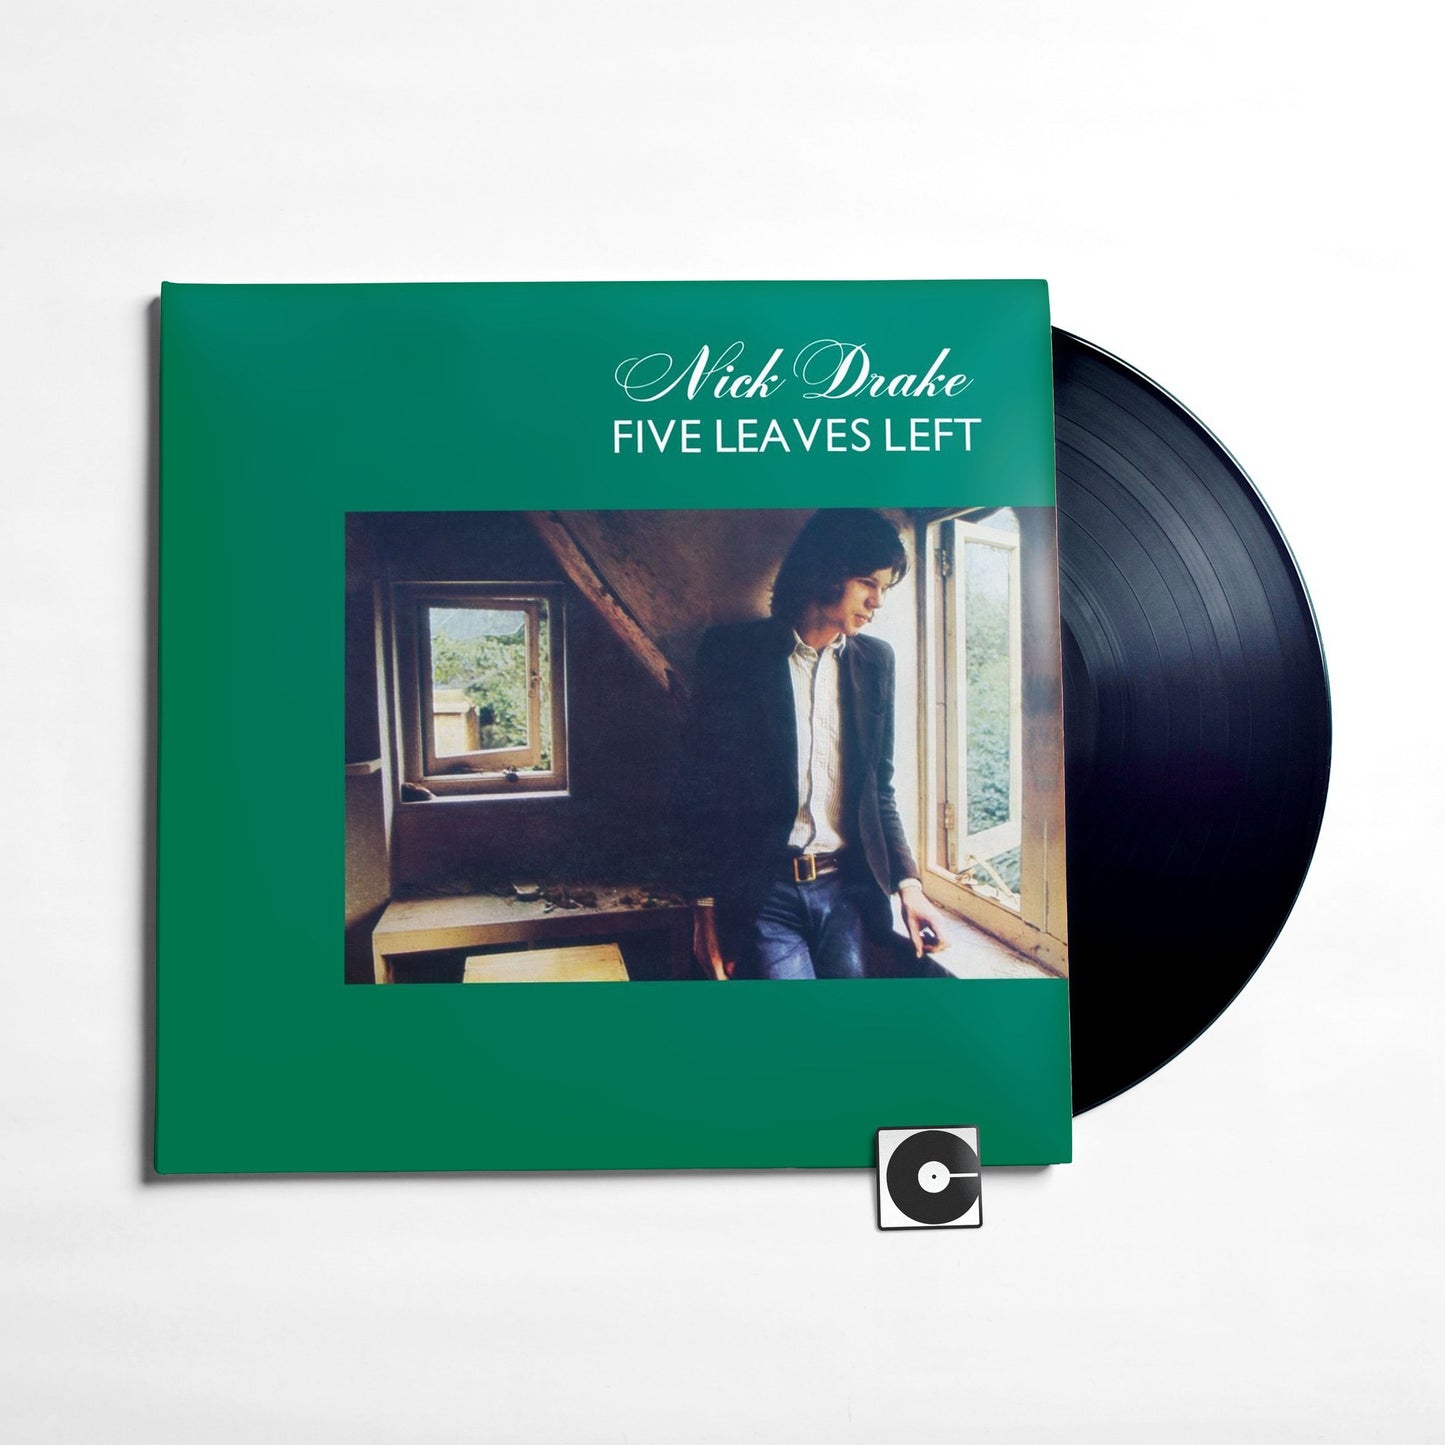 Nick Drake - "Five Leaves Left"